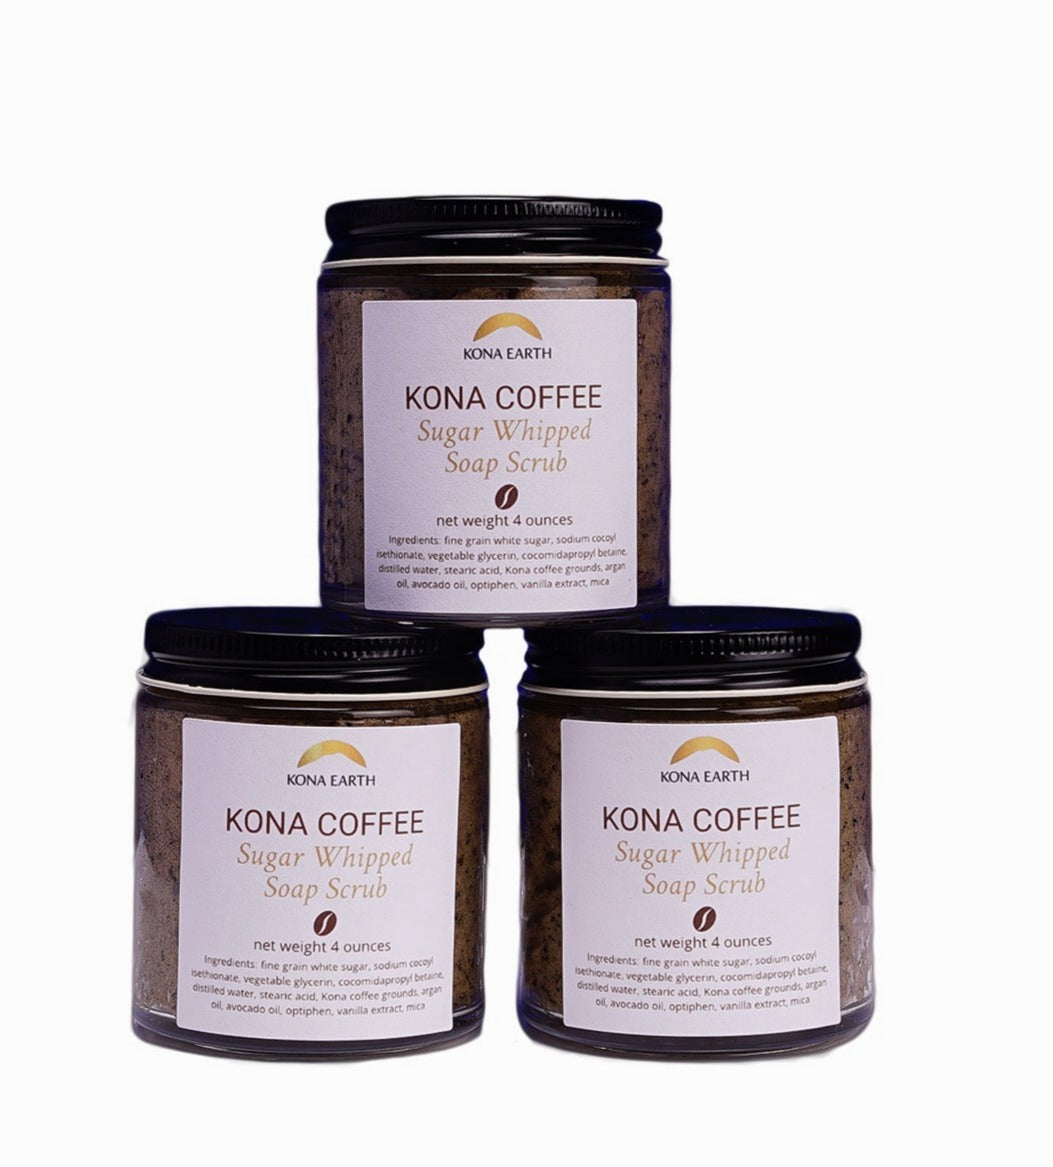 3 jars of Kona Coffee sugar whipped soap scrub